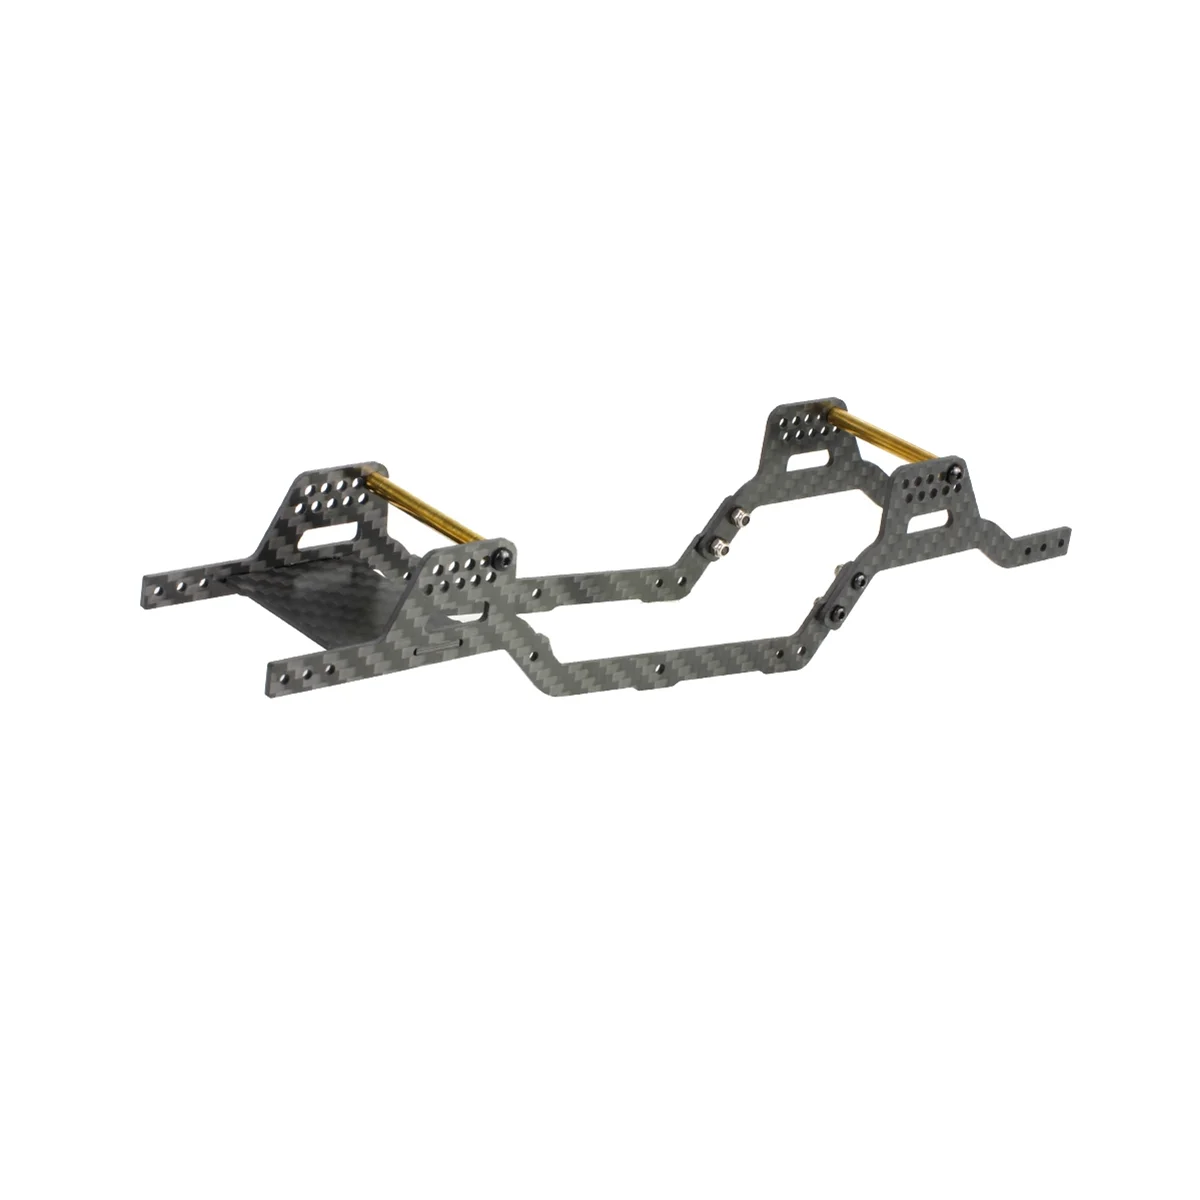 LCG Carbon Fiber Chassis Kit Frame Girder Rail for TRX4M 1/18 RC Crawler Car Upgrade Parts Accessories